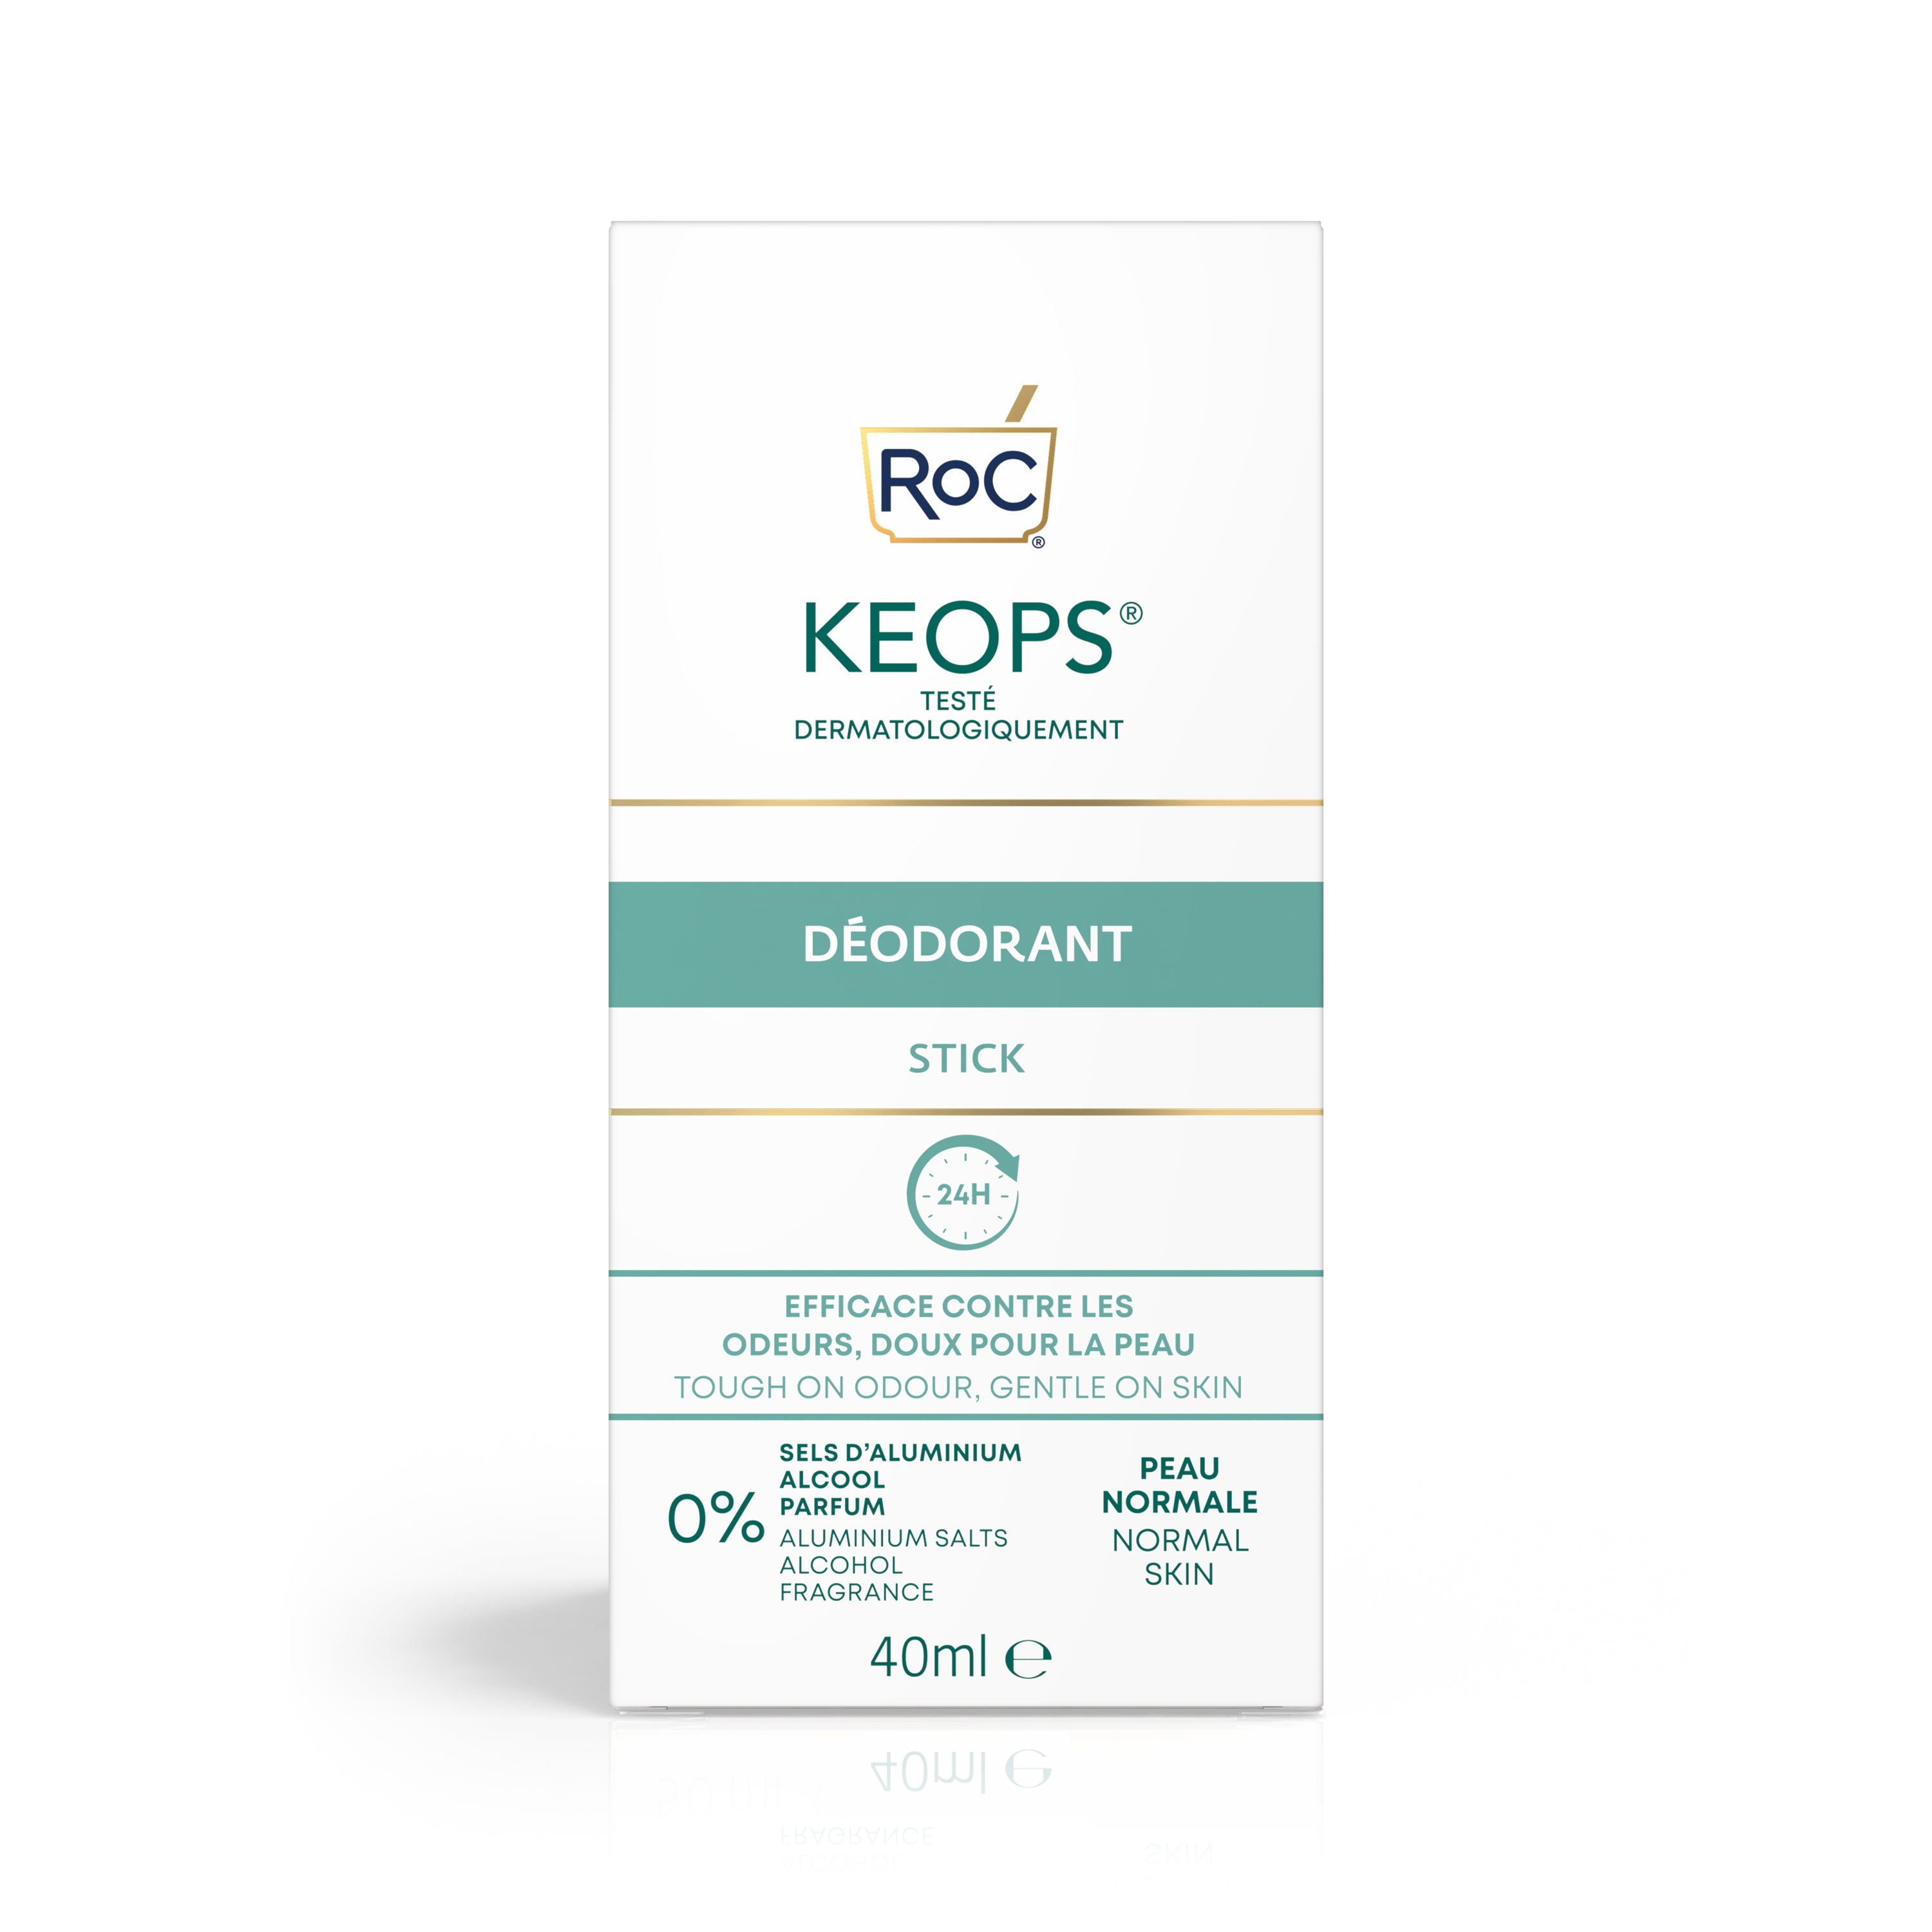 Keops Stick – RoC Netherlands